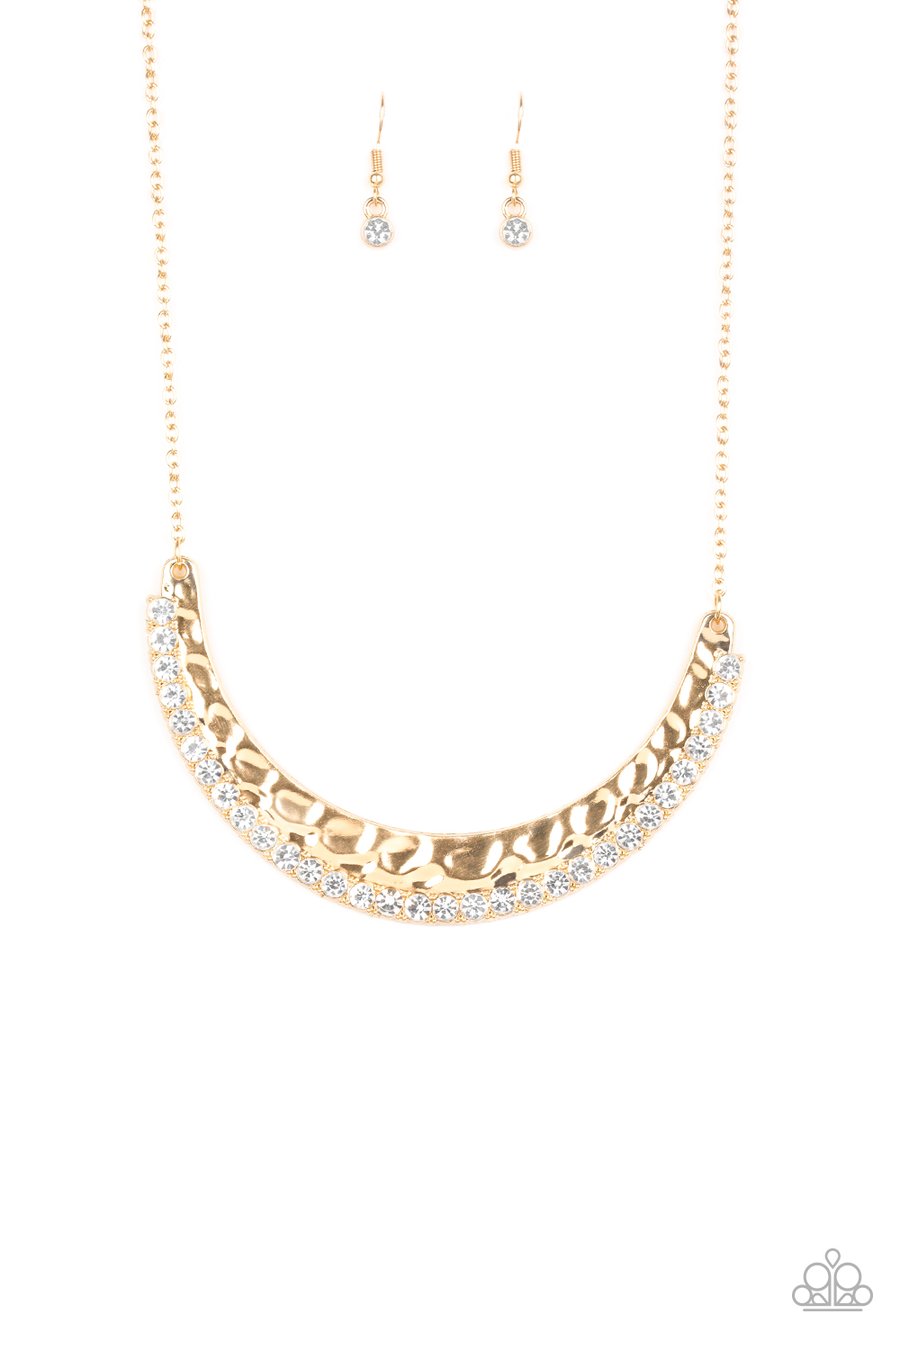 Paparazzi Accessories Impressive - Gold Necklaces - Lady T Accessories